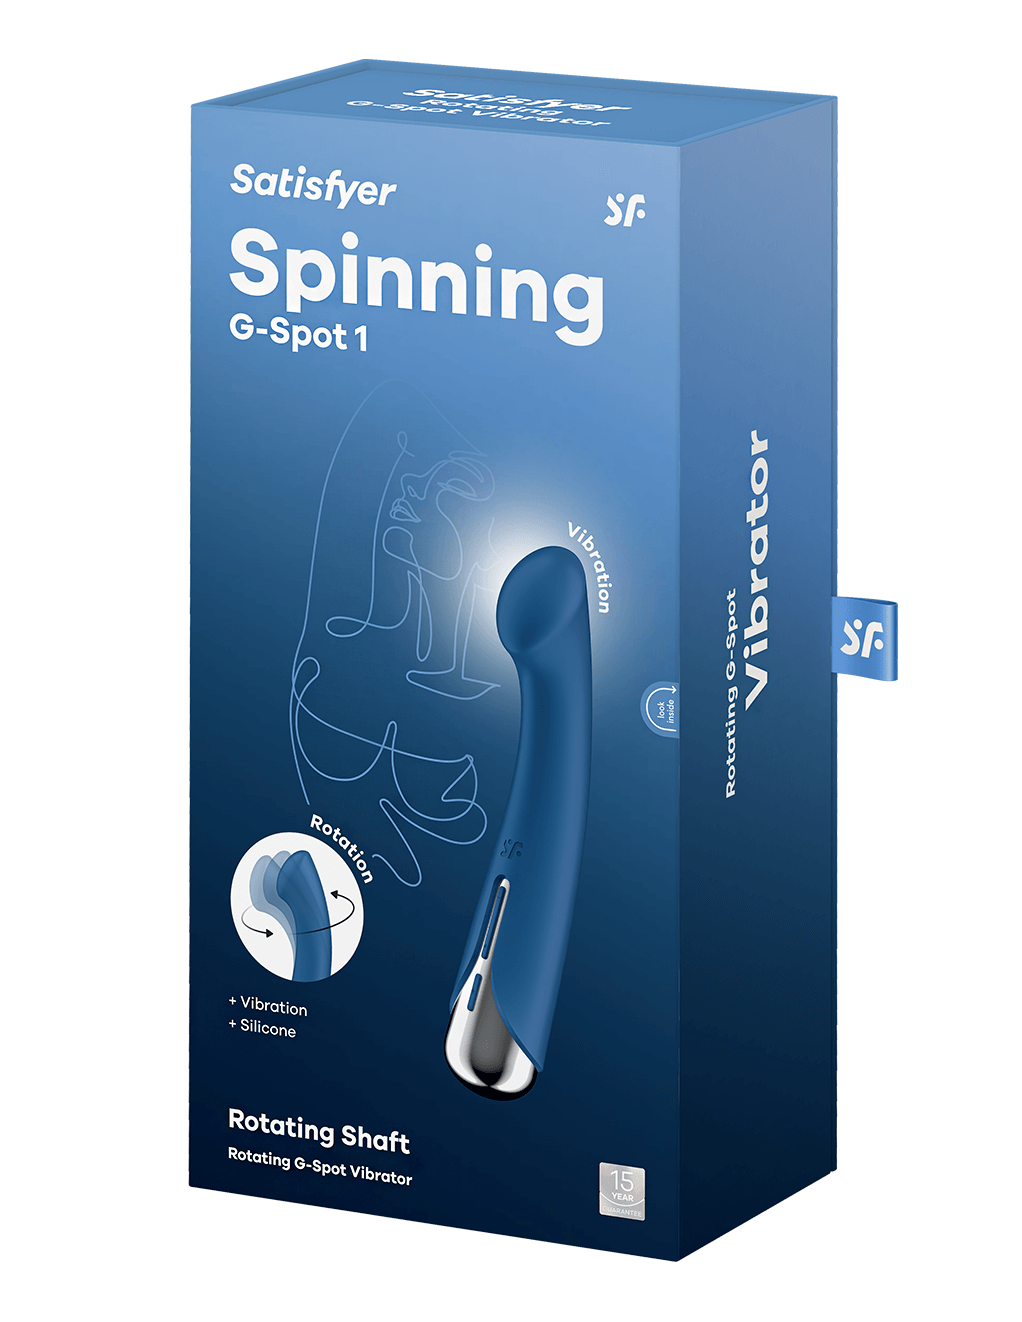 Satisfyer Spinning G-Spot 1 - Blue - Box